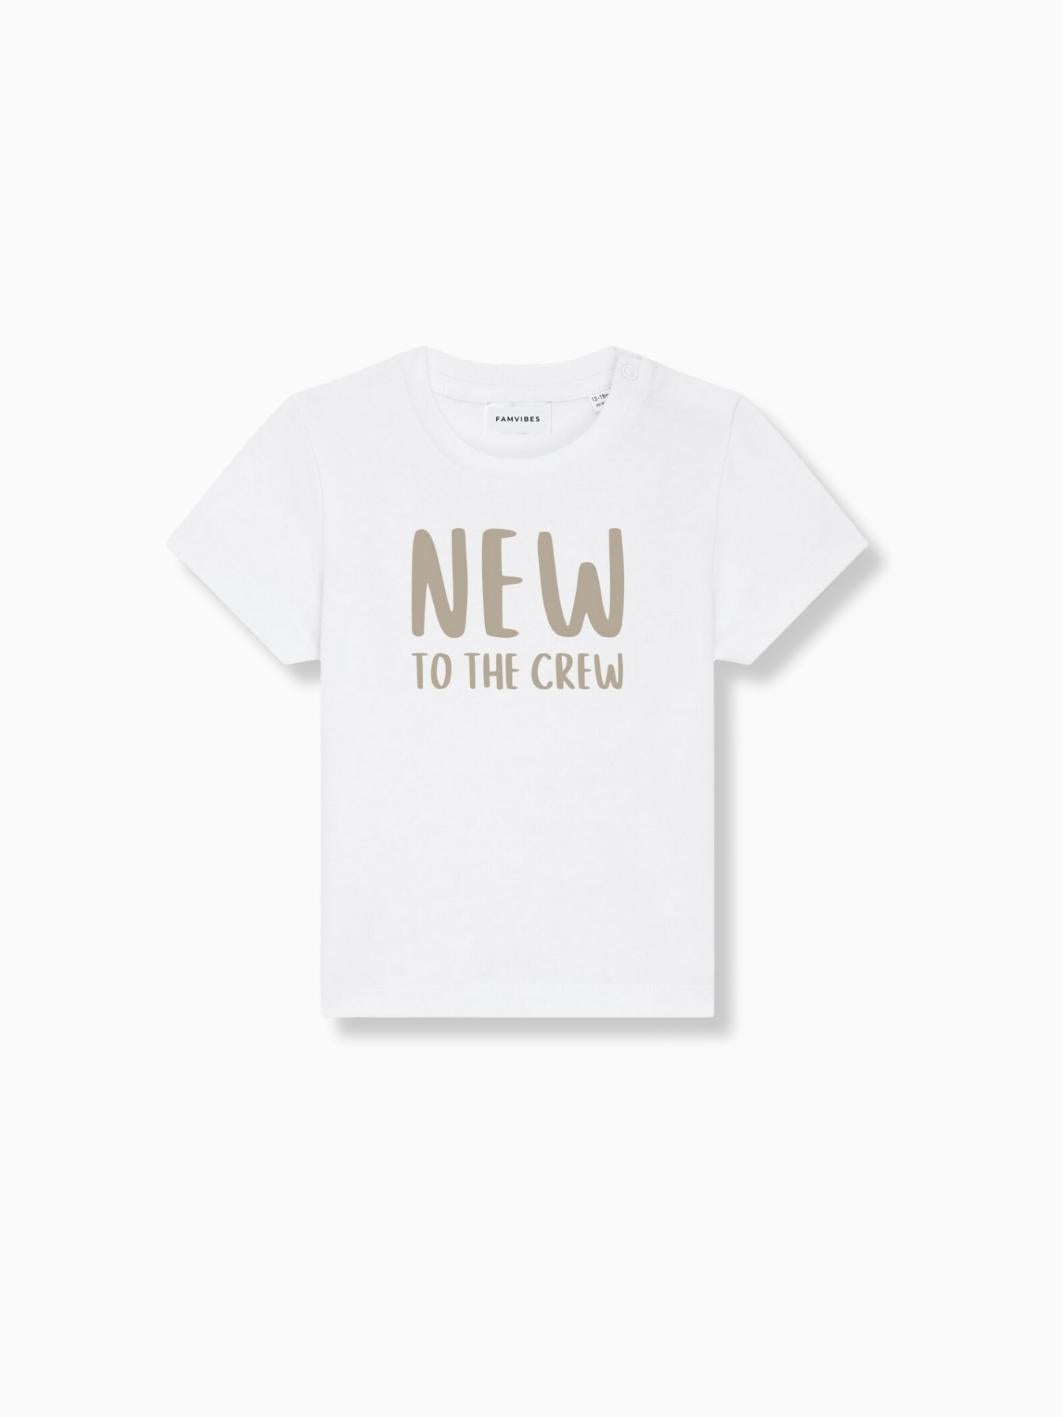 NEW - Baby Meilenstein T-Shirt - FAMVIBES 